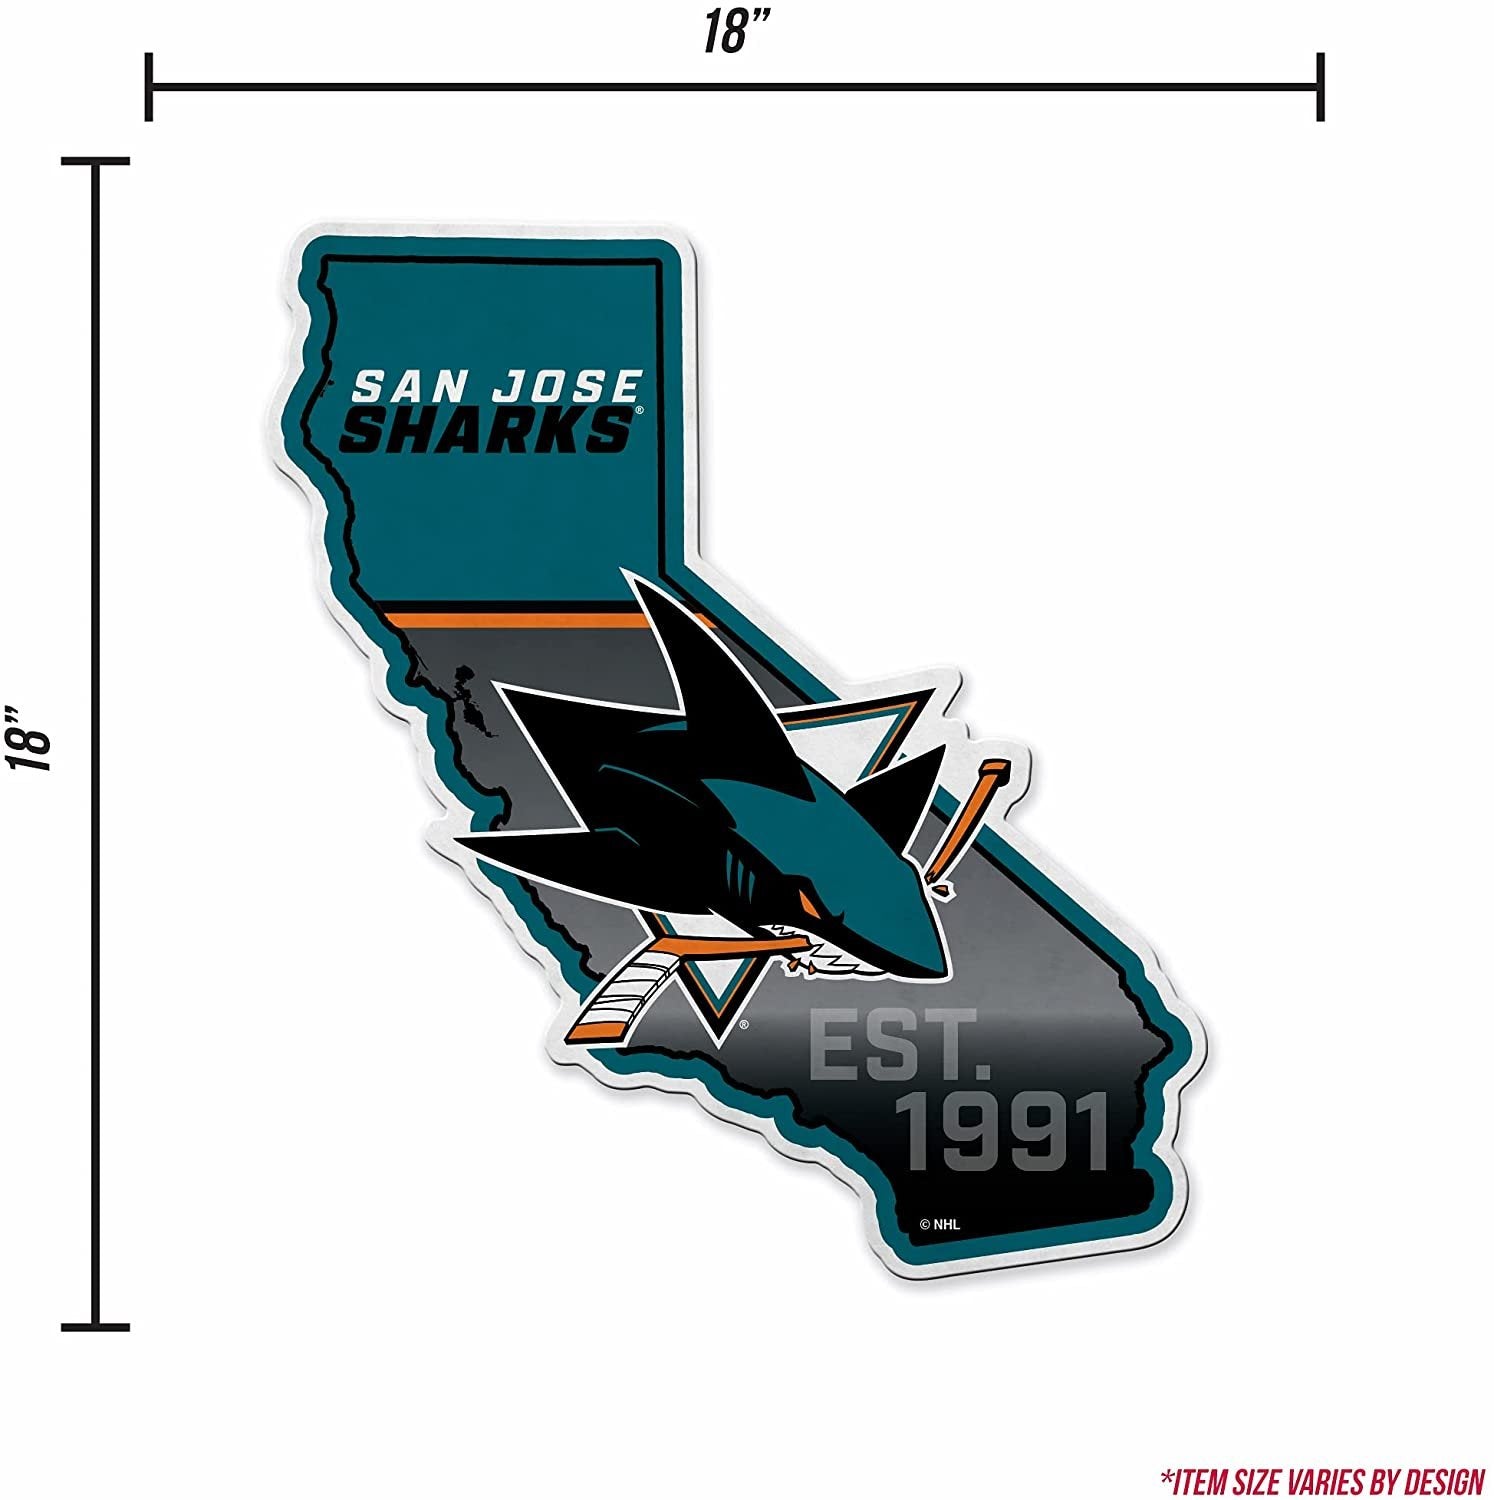 San Jose Sharks 18" State Shape Pennant Soft Felt